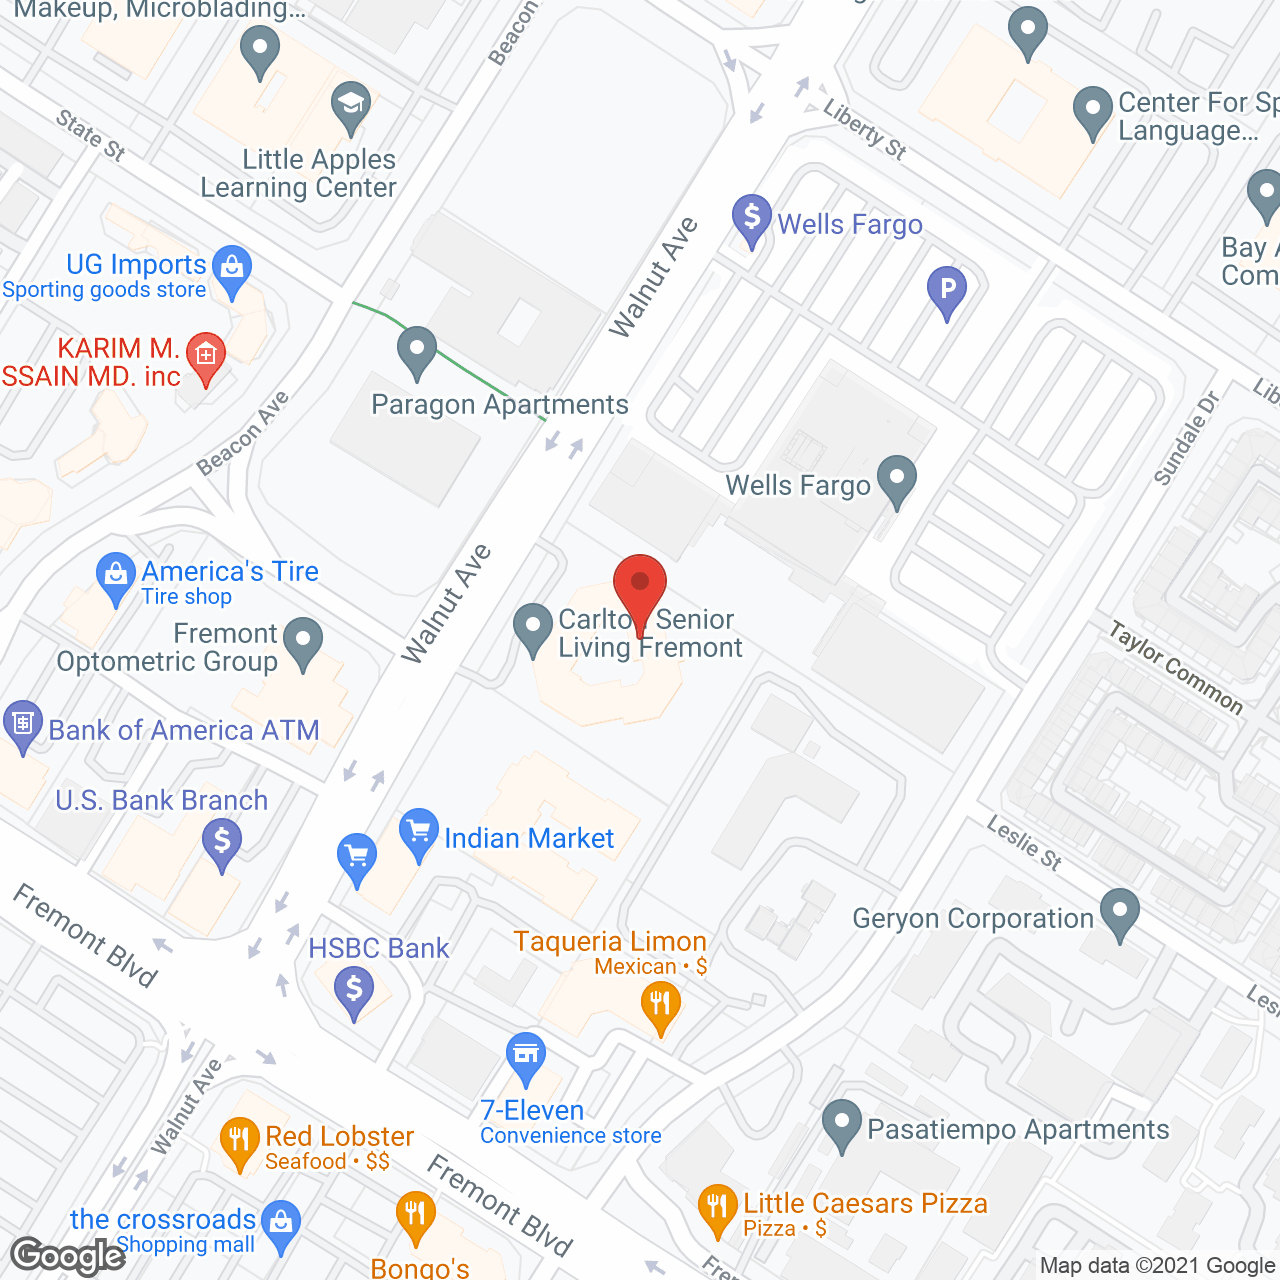 Carlton Plaza Of Fremont in google map